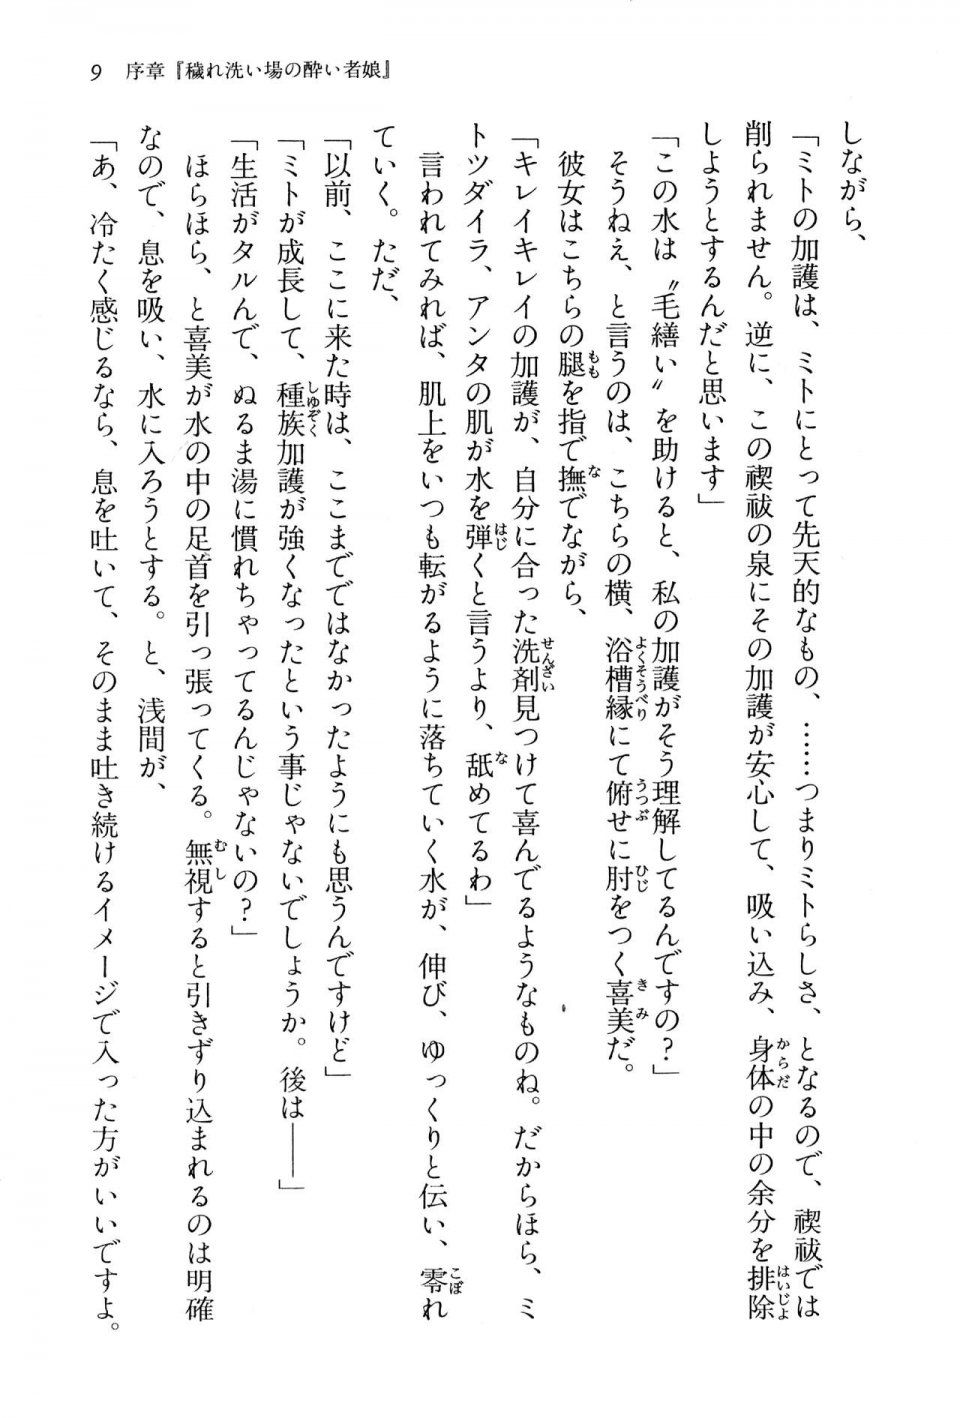 Kyoukai Senjou no Horizon BD Special Mininovel Vol 5(3A) - Photo #13